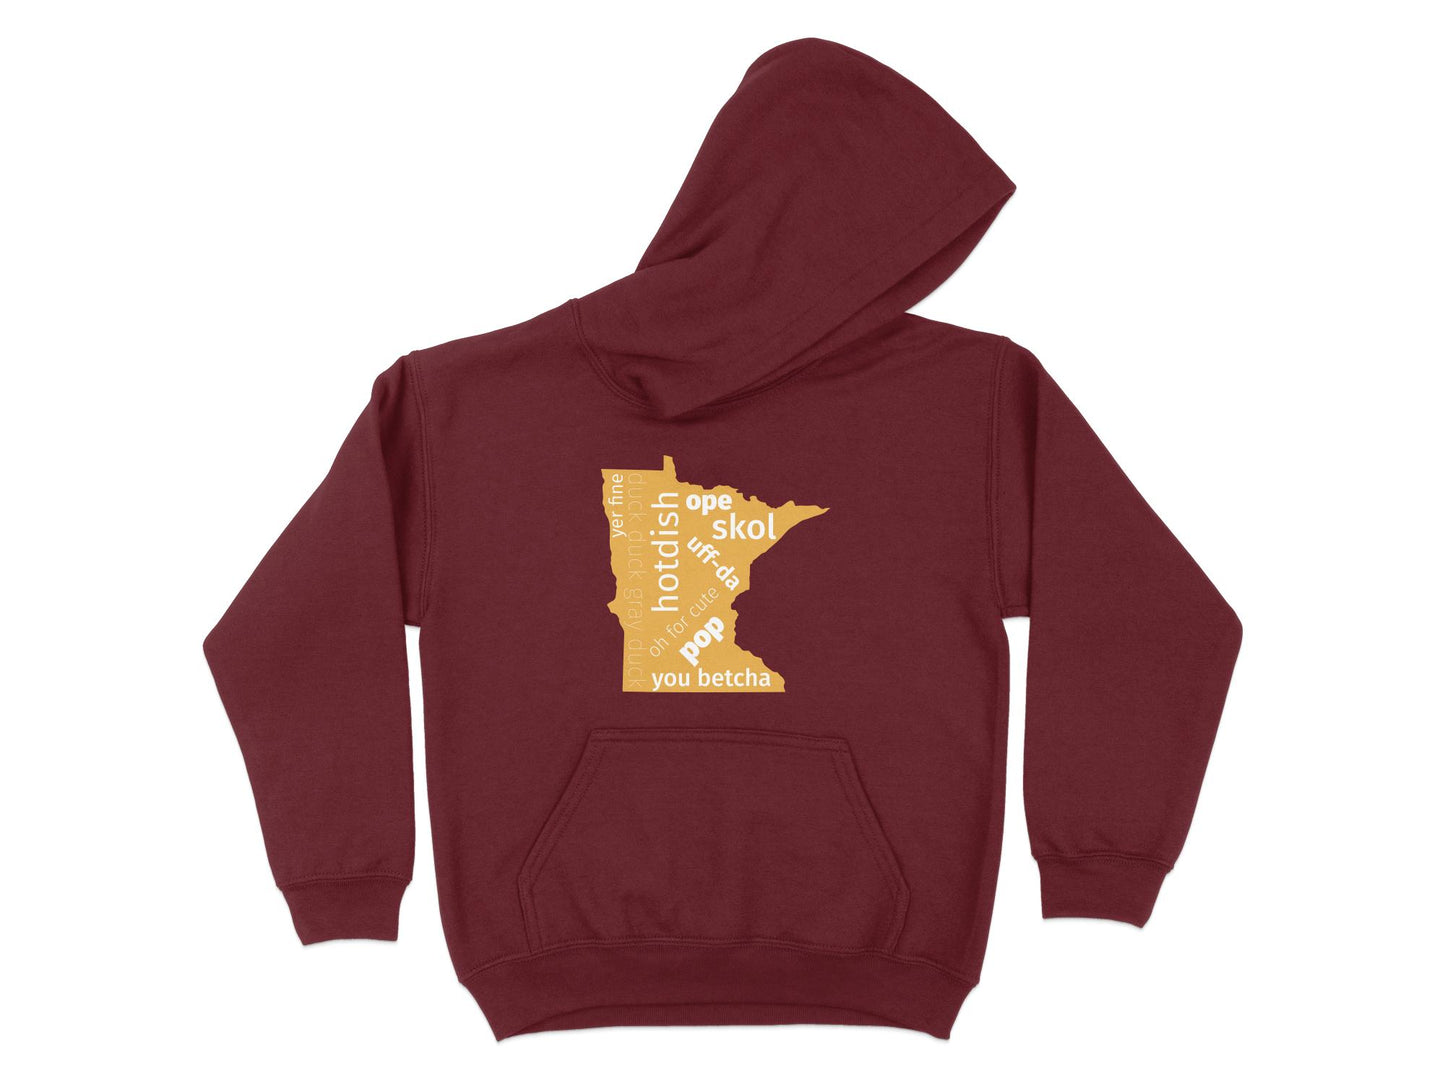 Minnesota Hoodie- The Most Minnesota Shirt Ever, maroon